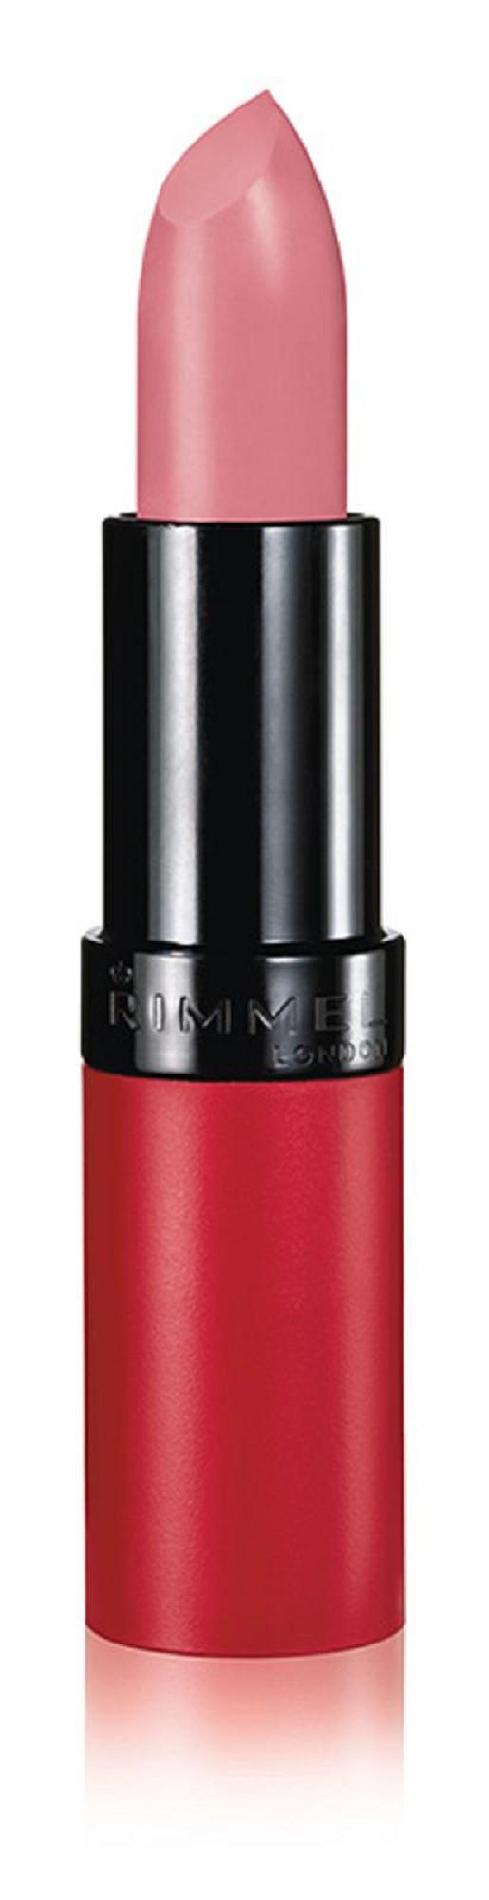 Rimmel Lasting Finish Matte Lipstick by Kate Moss Shade 101